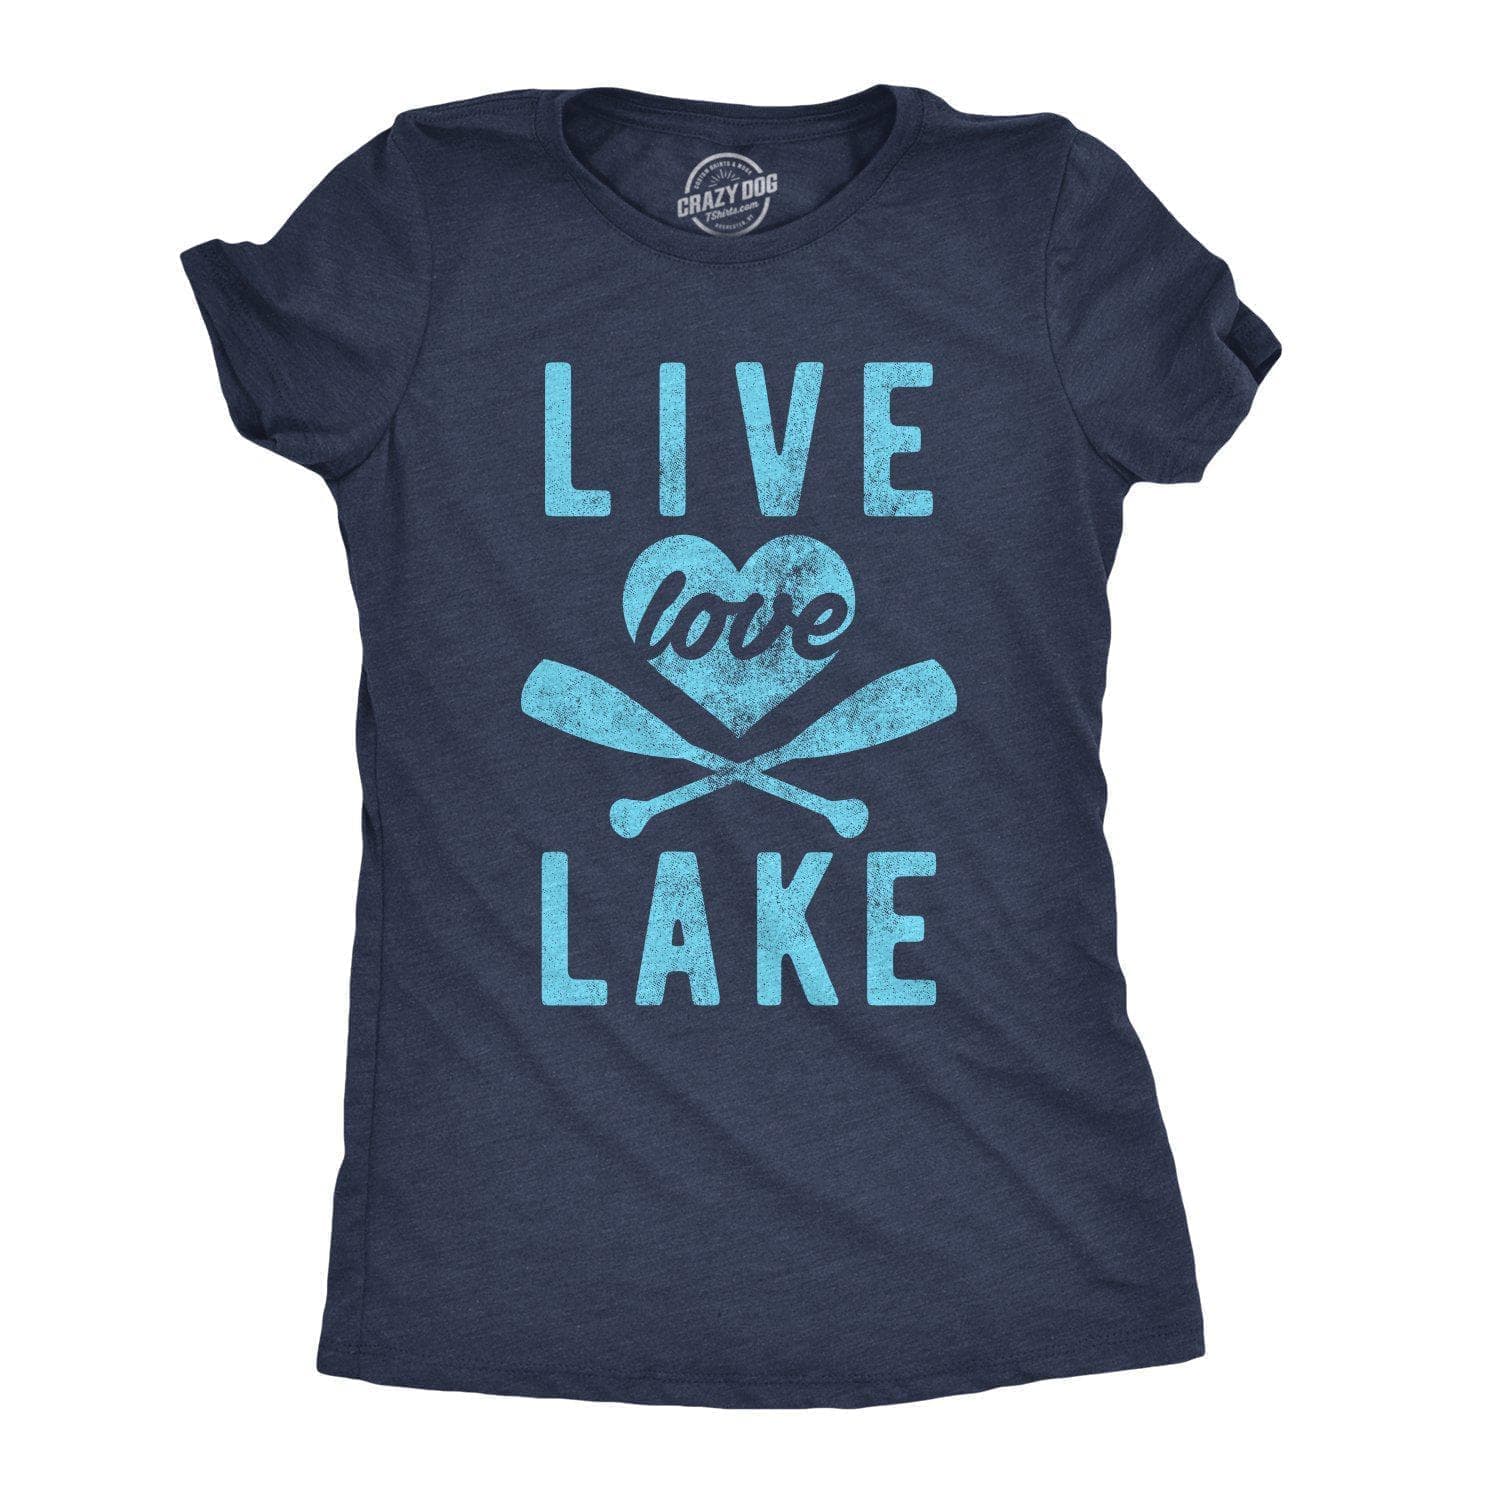 Live Lake Love Women's Tshirt - Crazy Dog T-Shirts